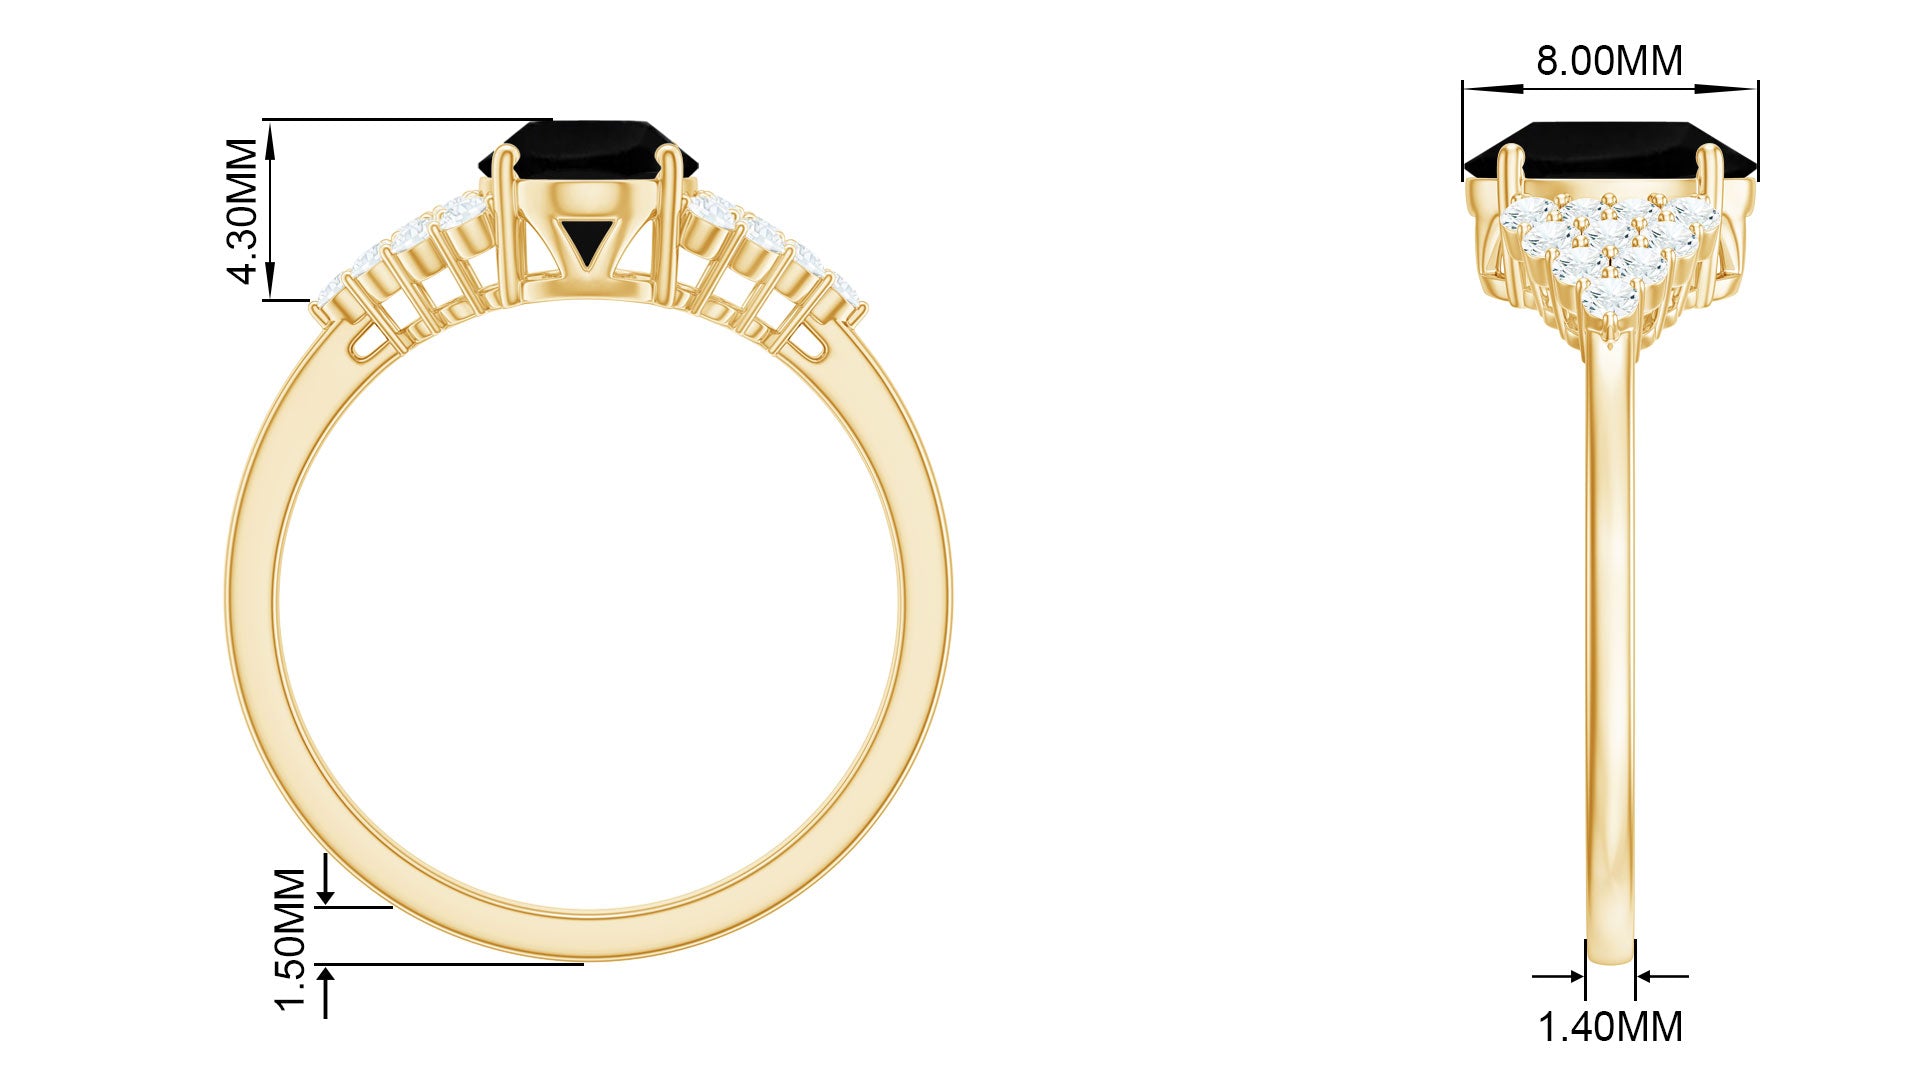 Created Black Diamond Oval Engagement Ring with Diamond Lab Created Black Diamond - ( AAAA ) - Quality - Rosec Jewels